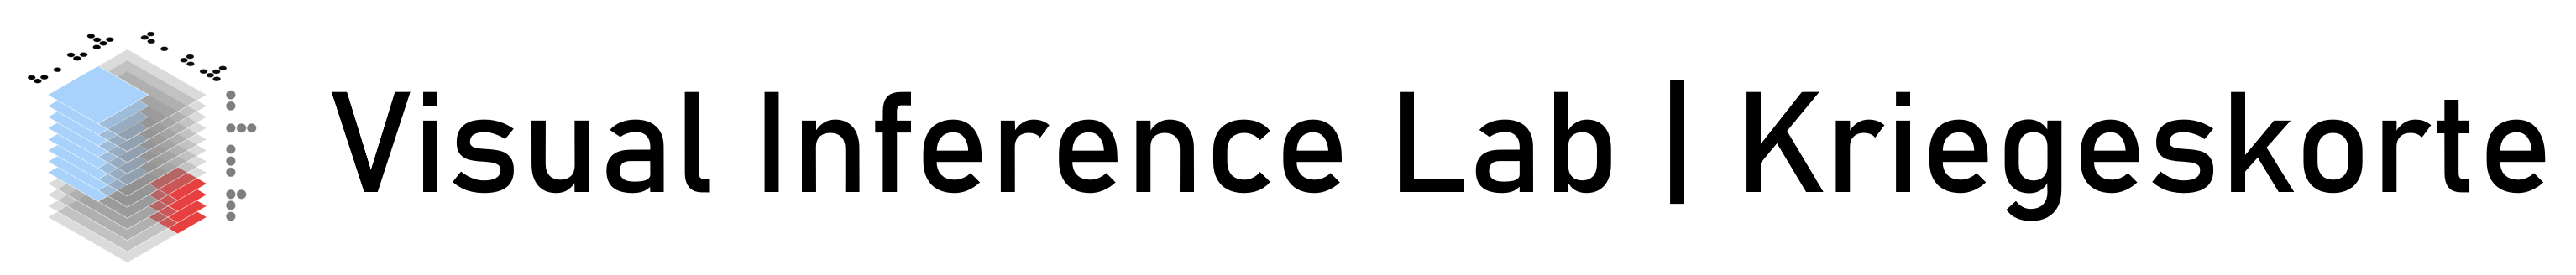 Visual Inference Lab | Kriegeskorte logo